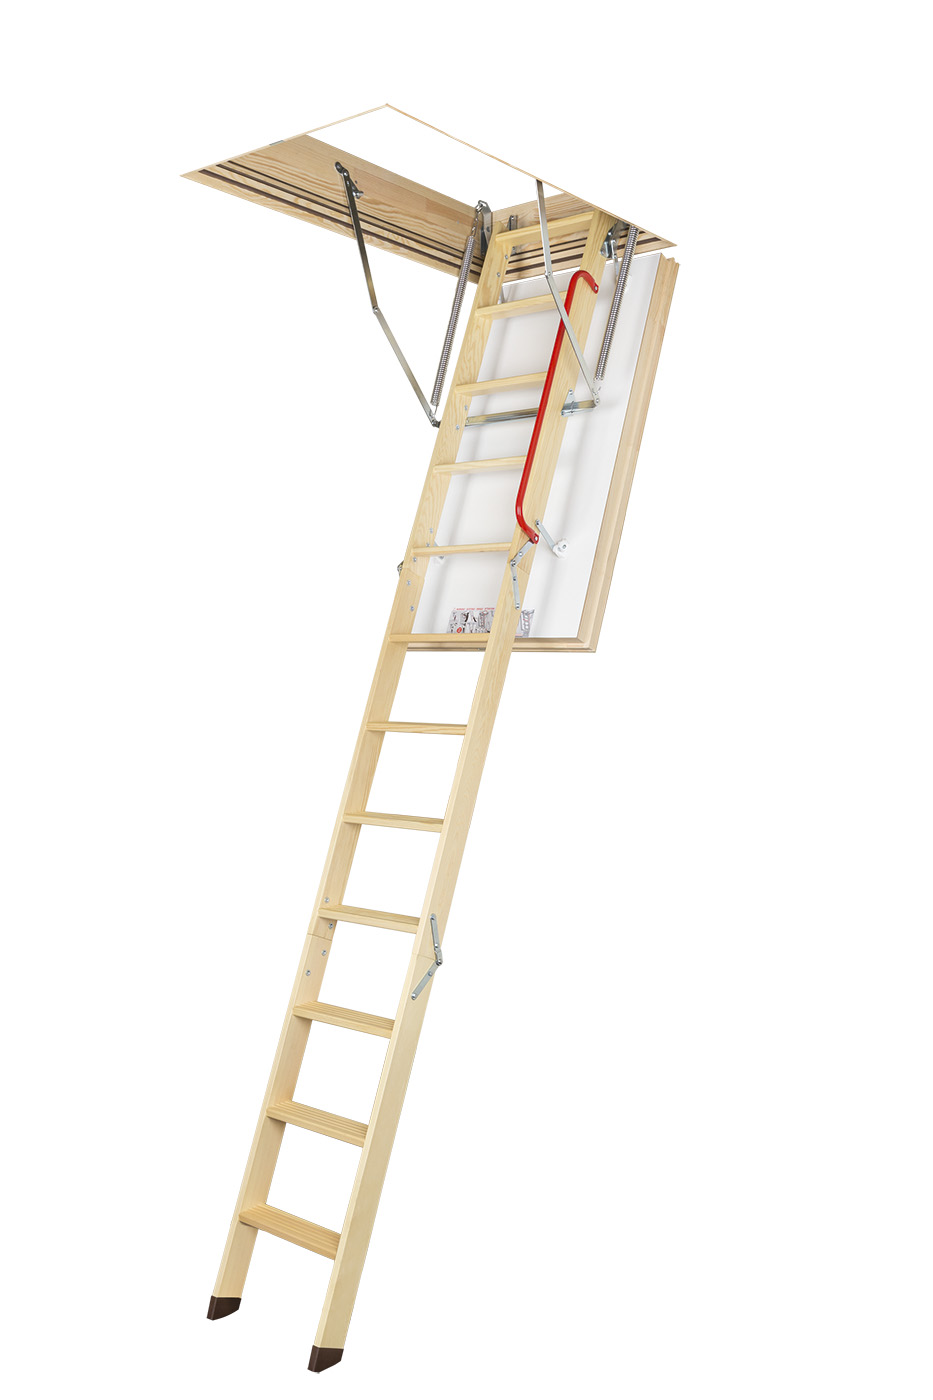 Fakro LWT 70х120x280см деревянная суперэнергосберегающая чердачная лестница (Факро), Лестница чердачная LWT 70х120х280 Fakro